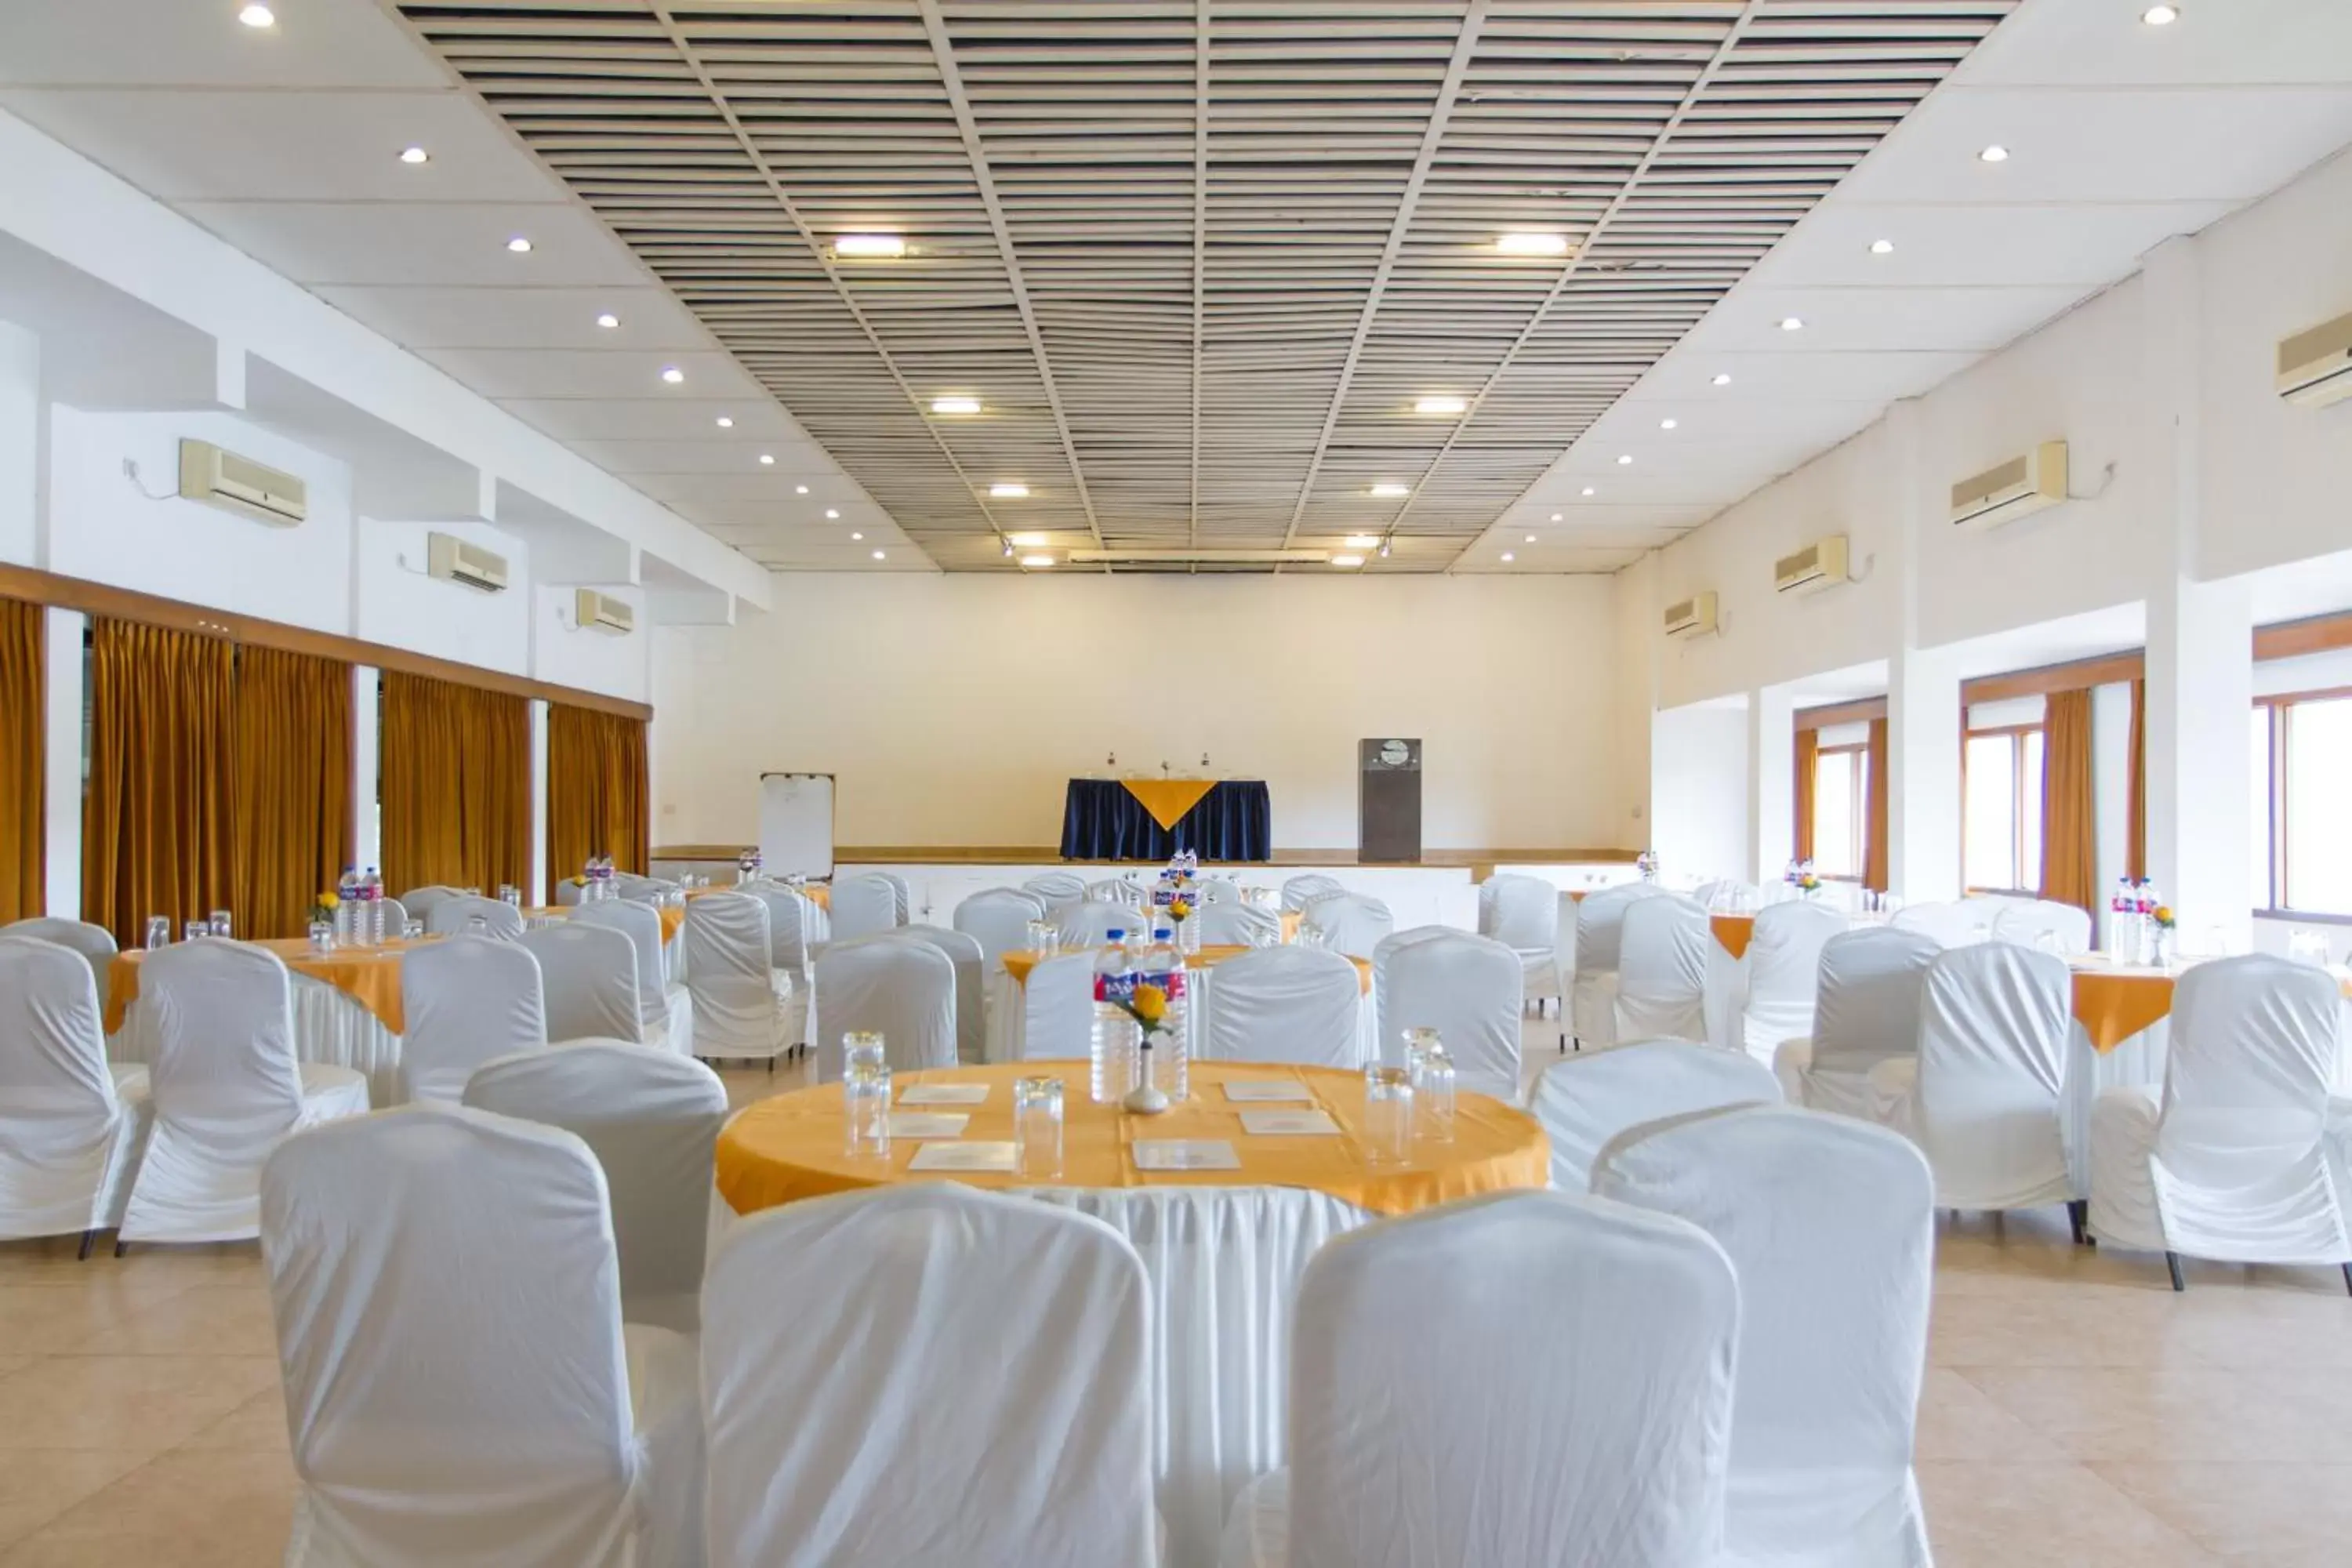 Area and facilities, Banquet Facilities in Resorte Marinha Dourada